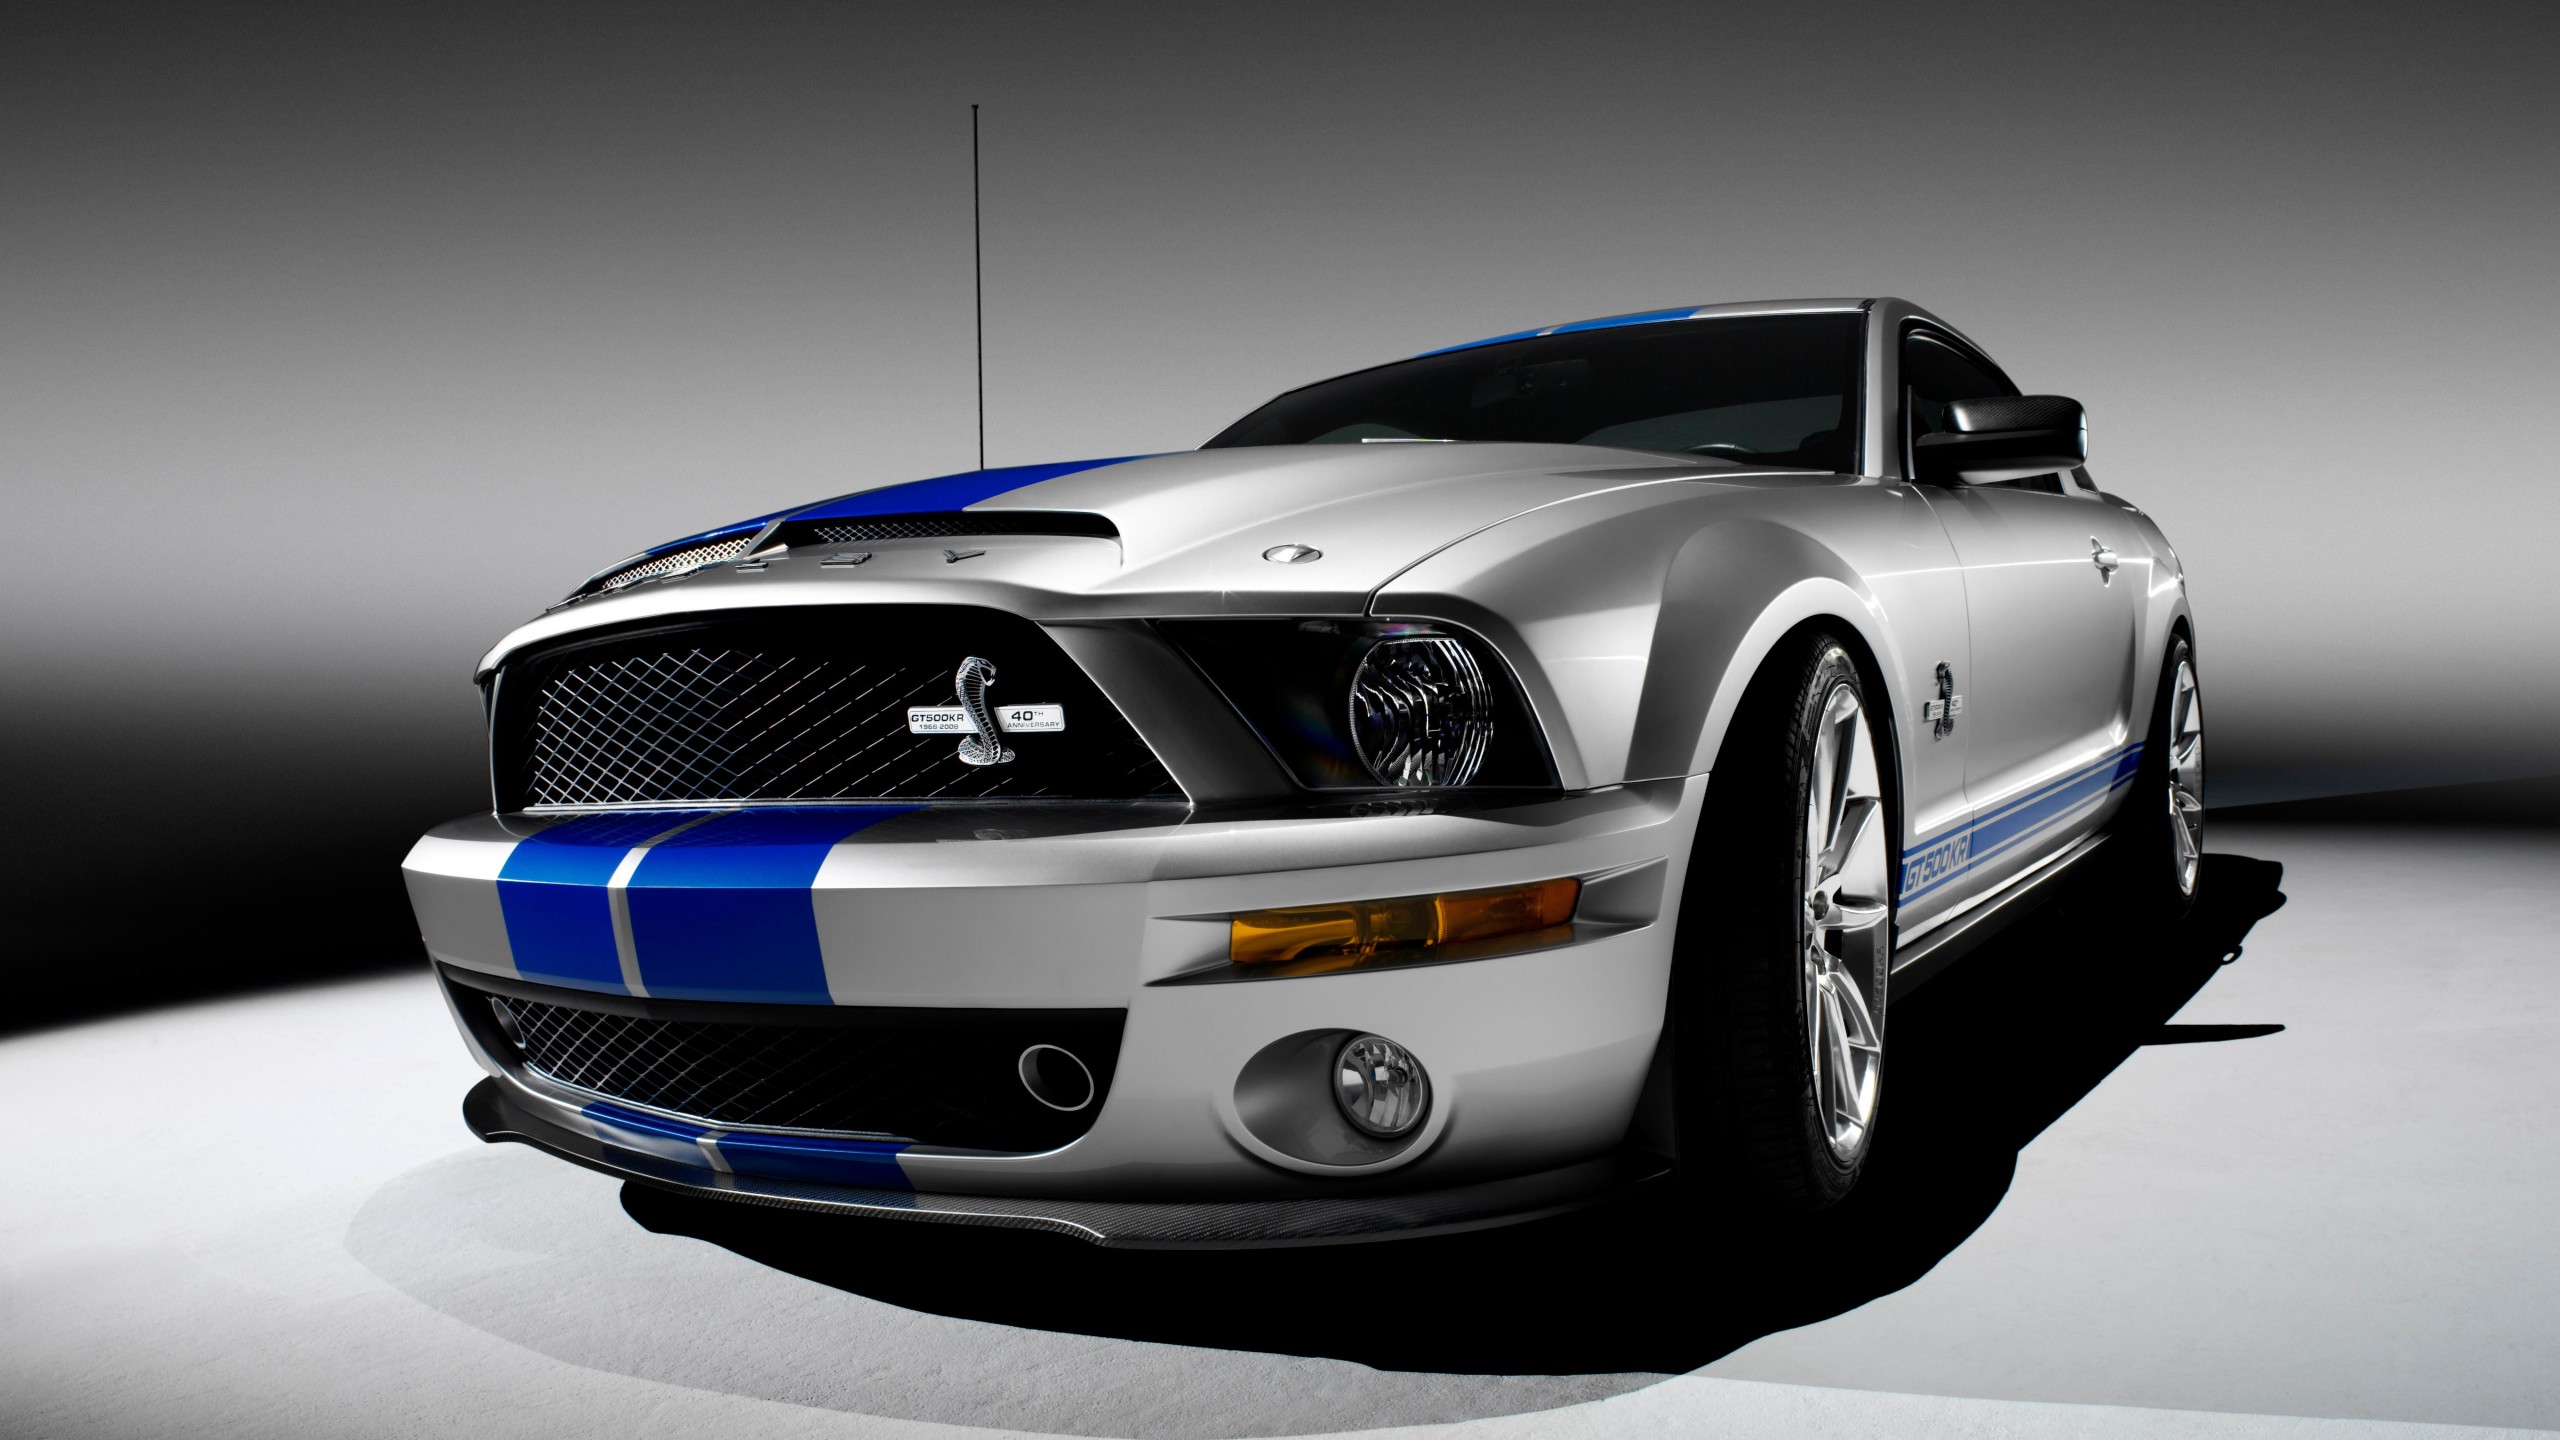 Shelby Mustang GT500KR Wallpaper for Desktop 2560x1440